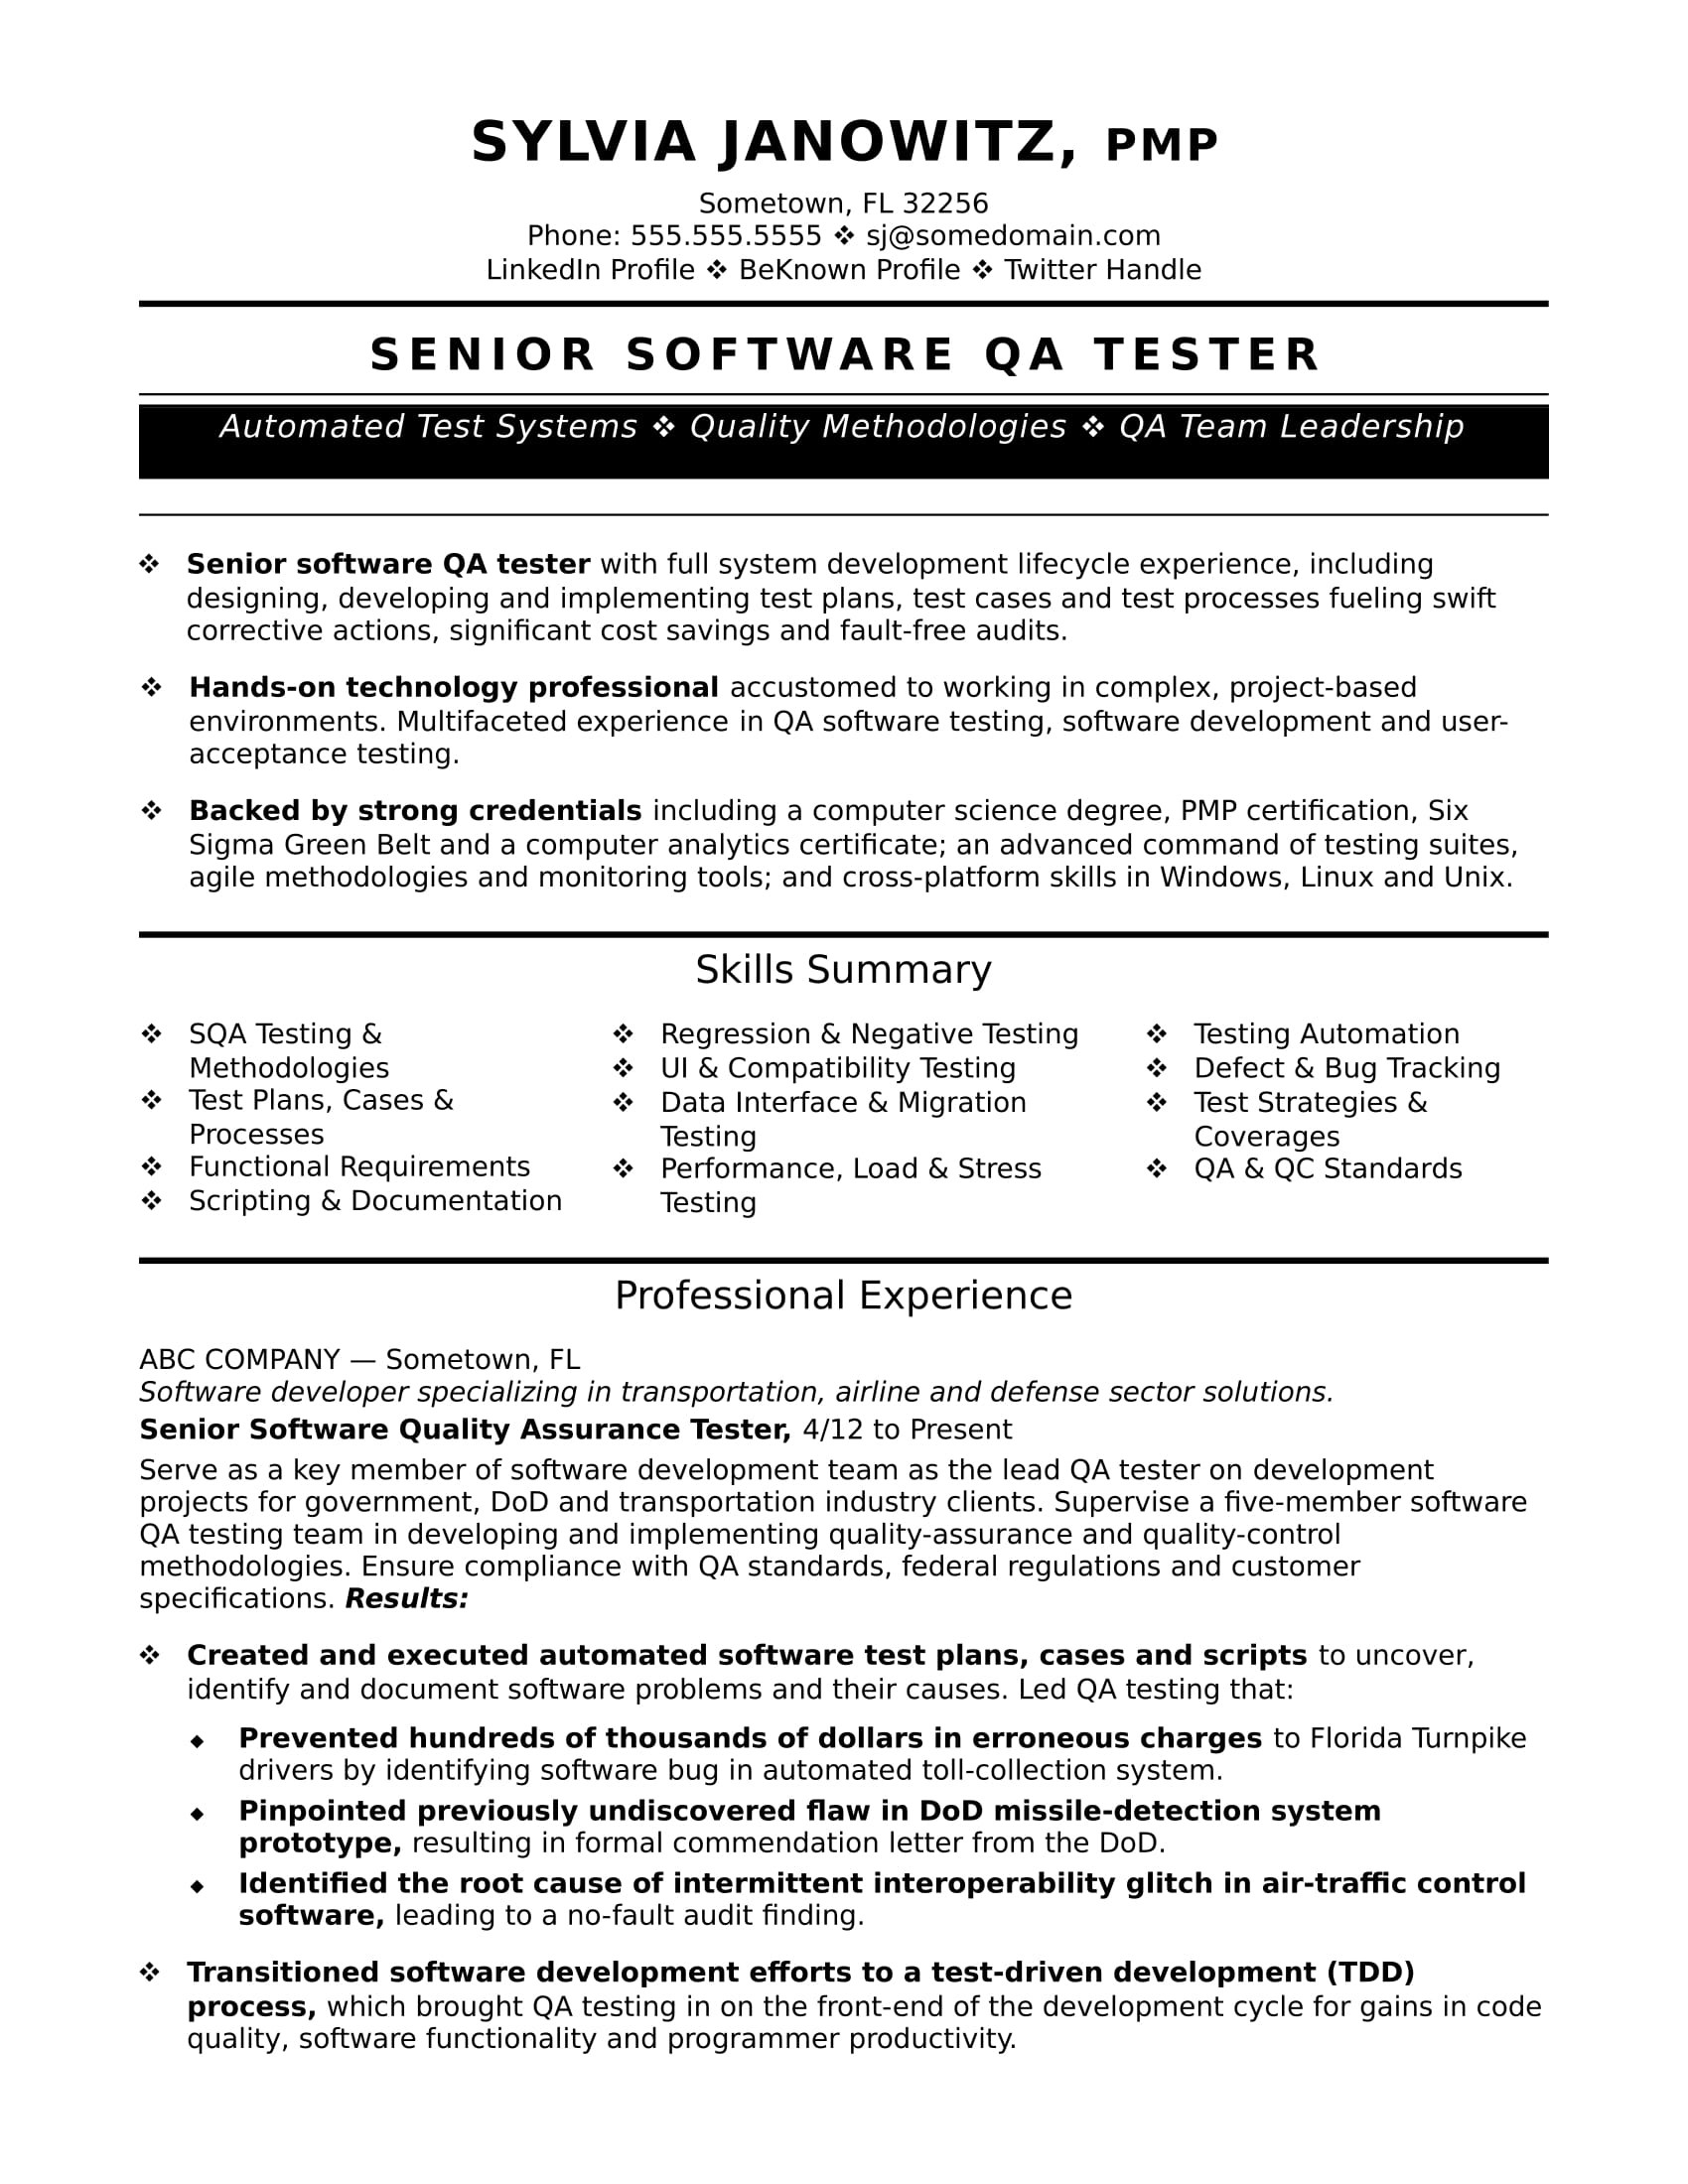 Software Testing Resume Samples 3 Years Experience Experienced Qa software Tester Resume Sample Monster.com